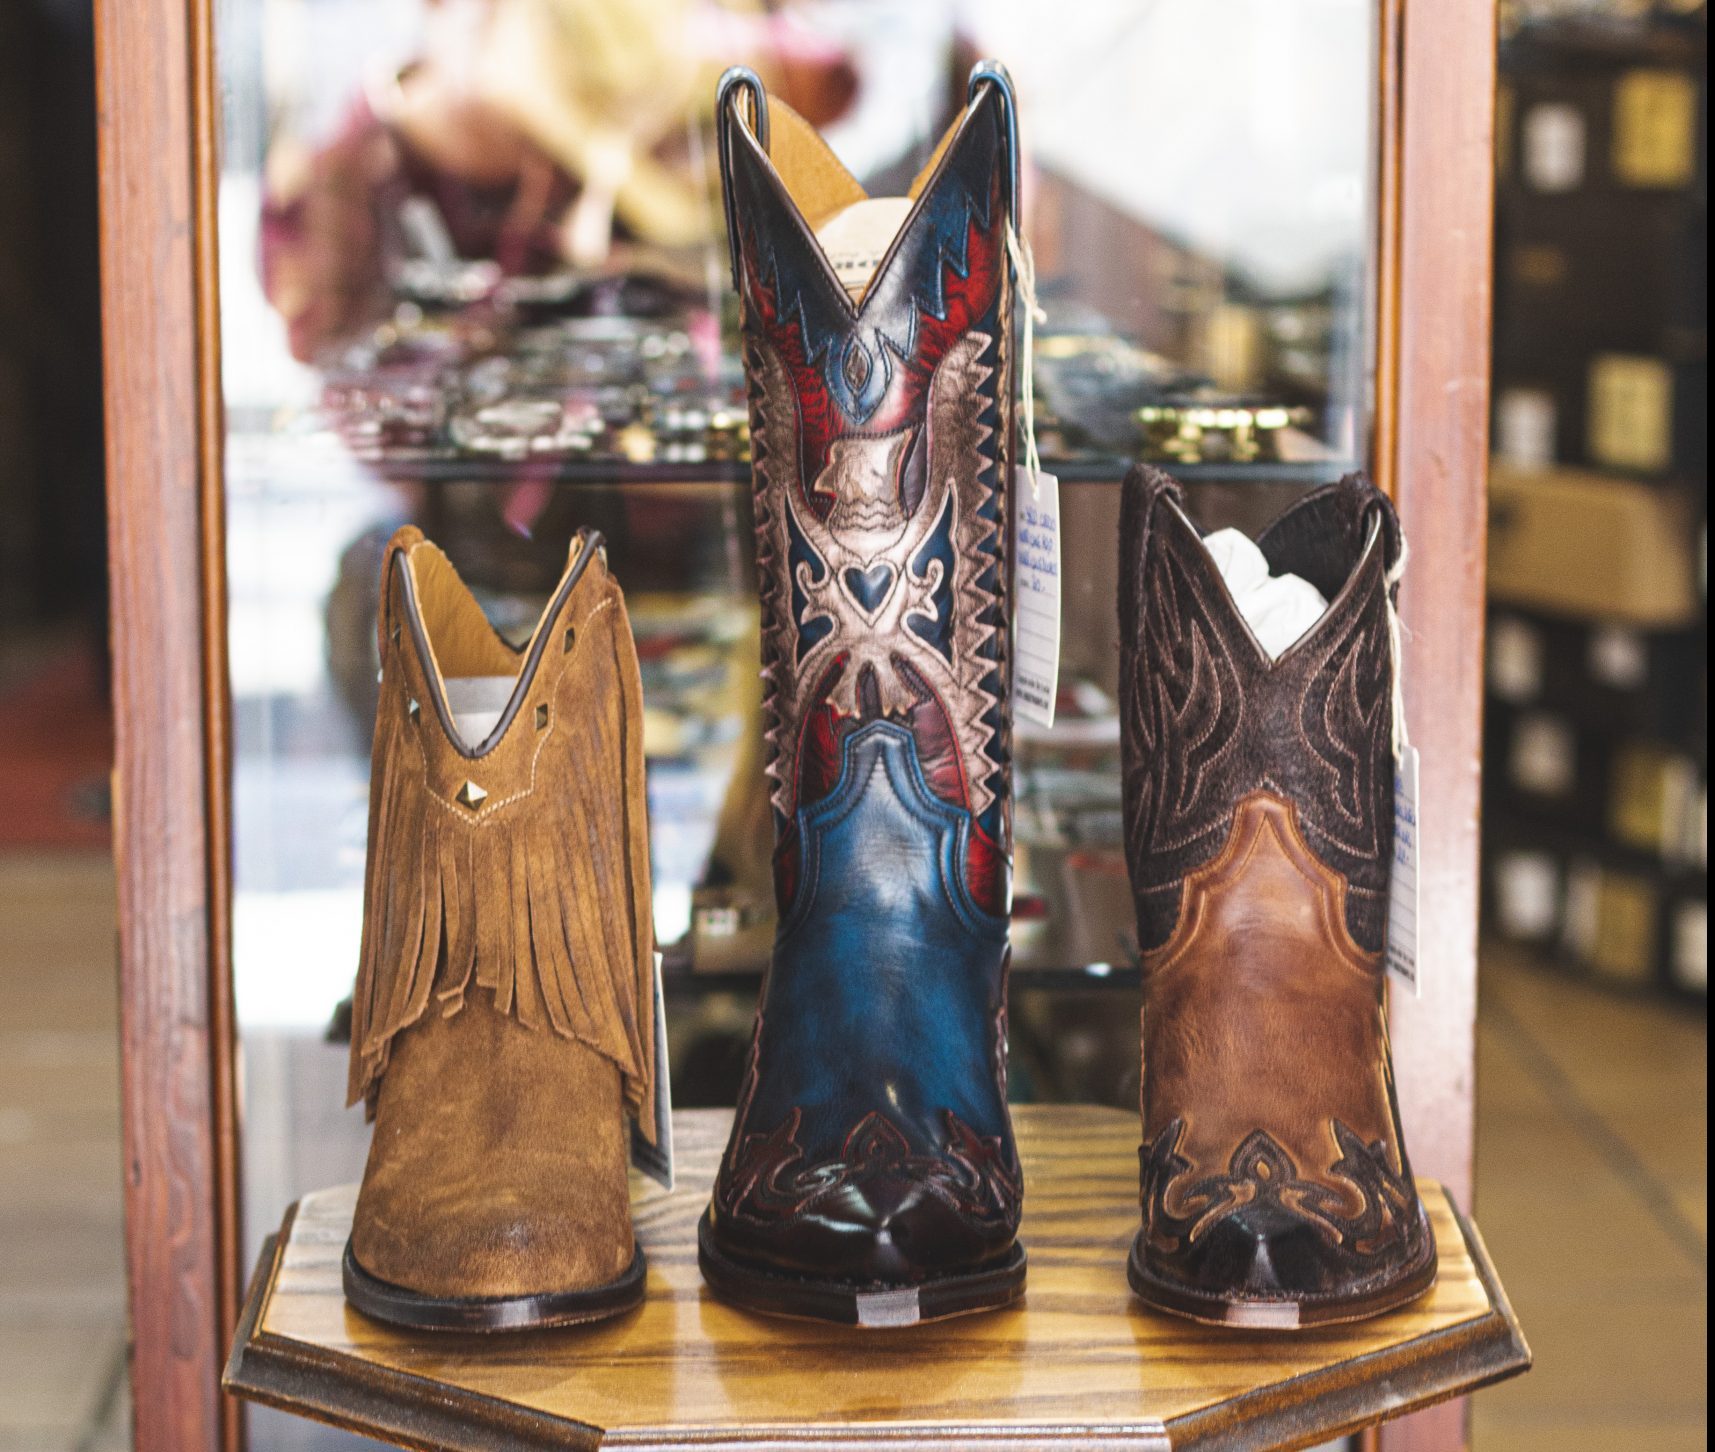 Botas de cuero, un calzado con historia - Corbeto's Boots Blog